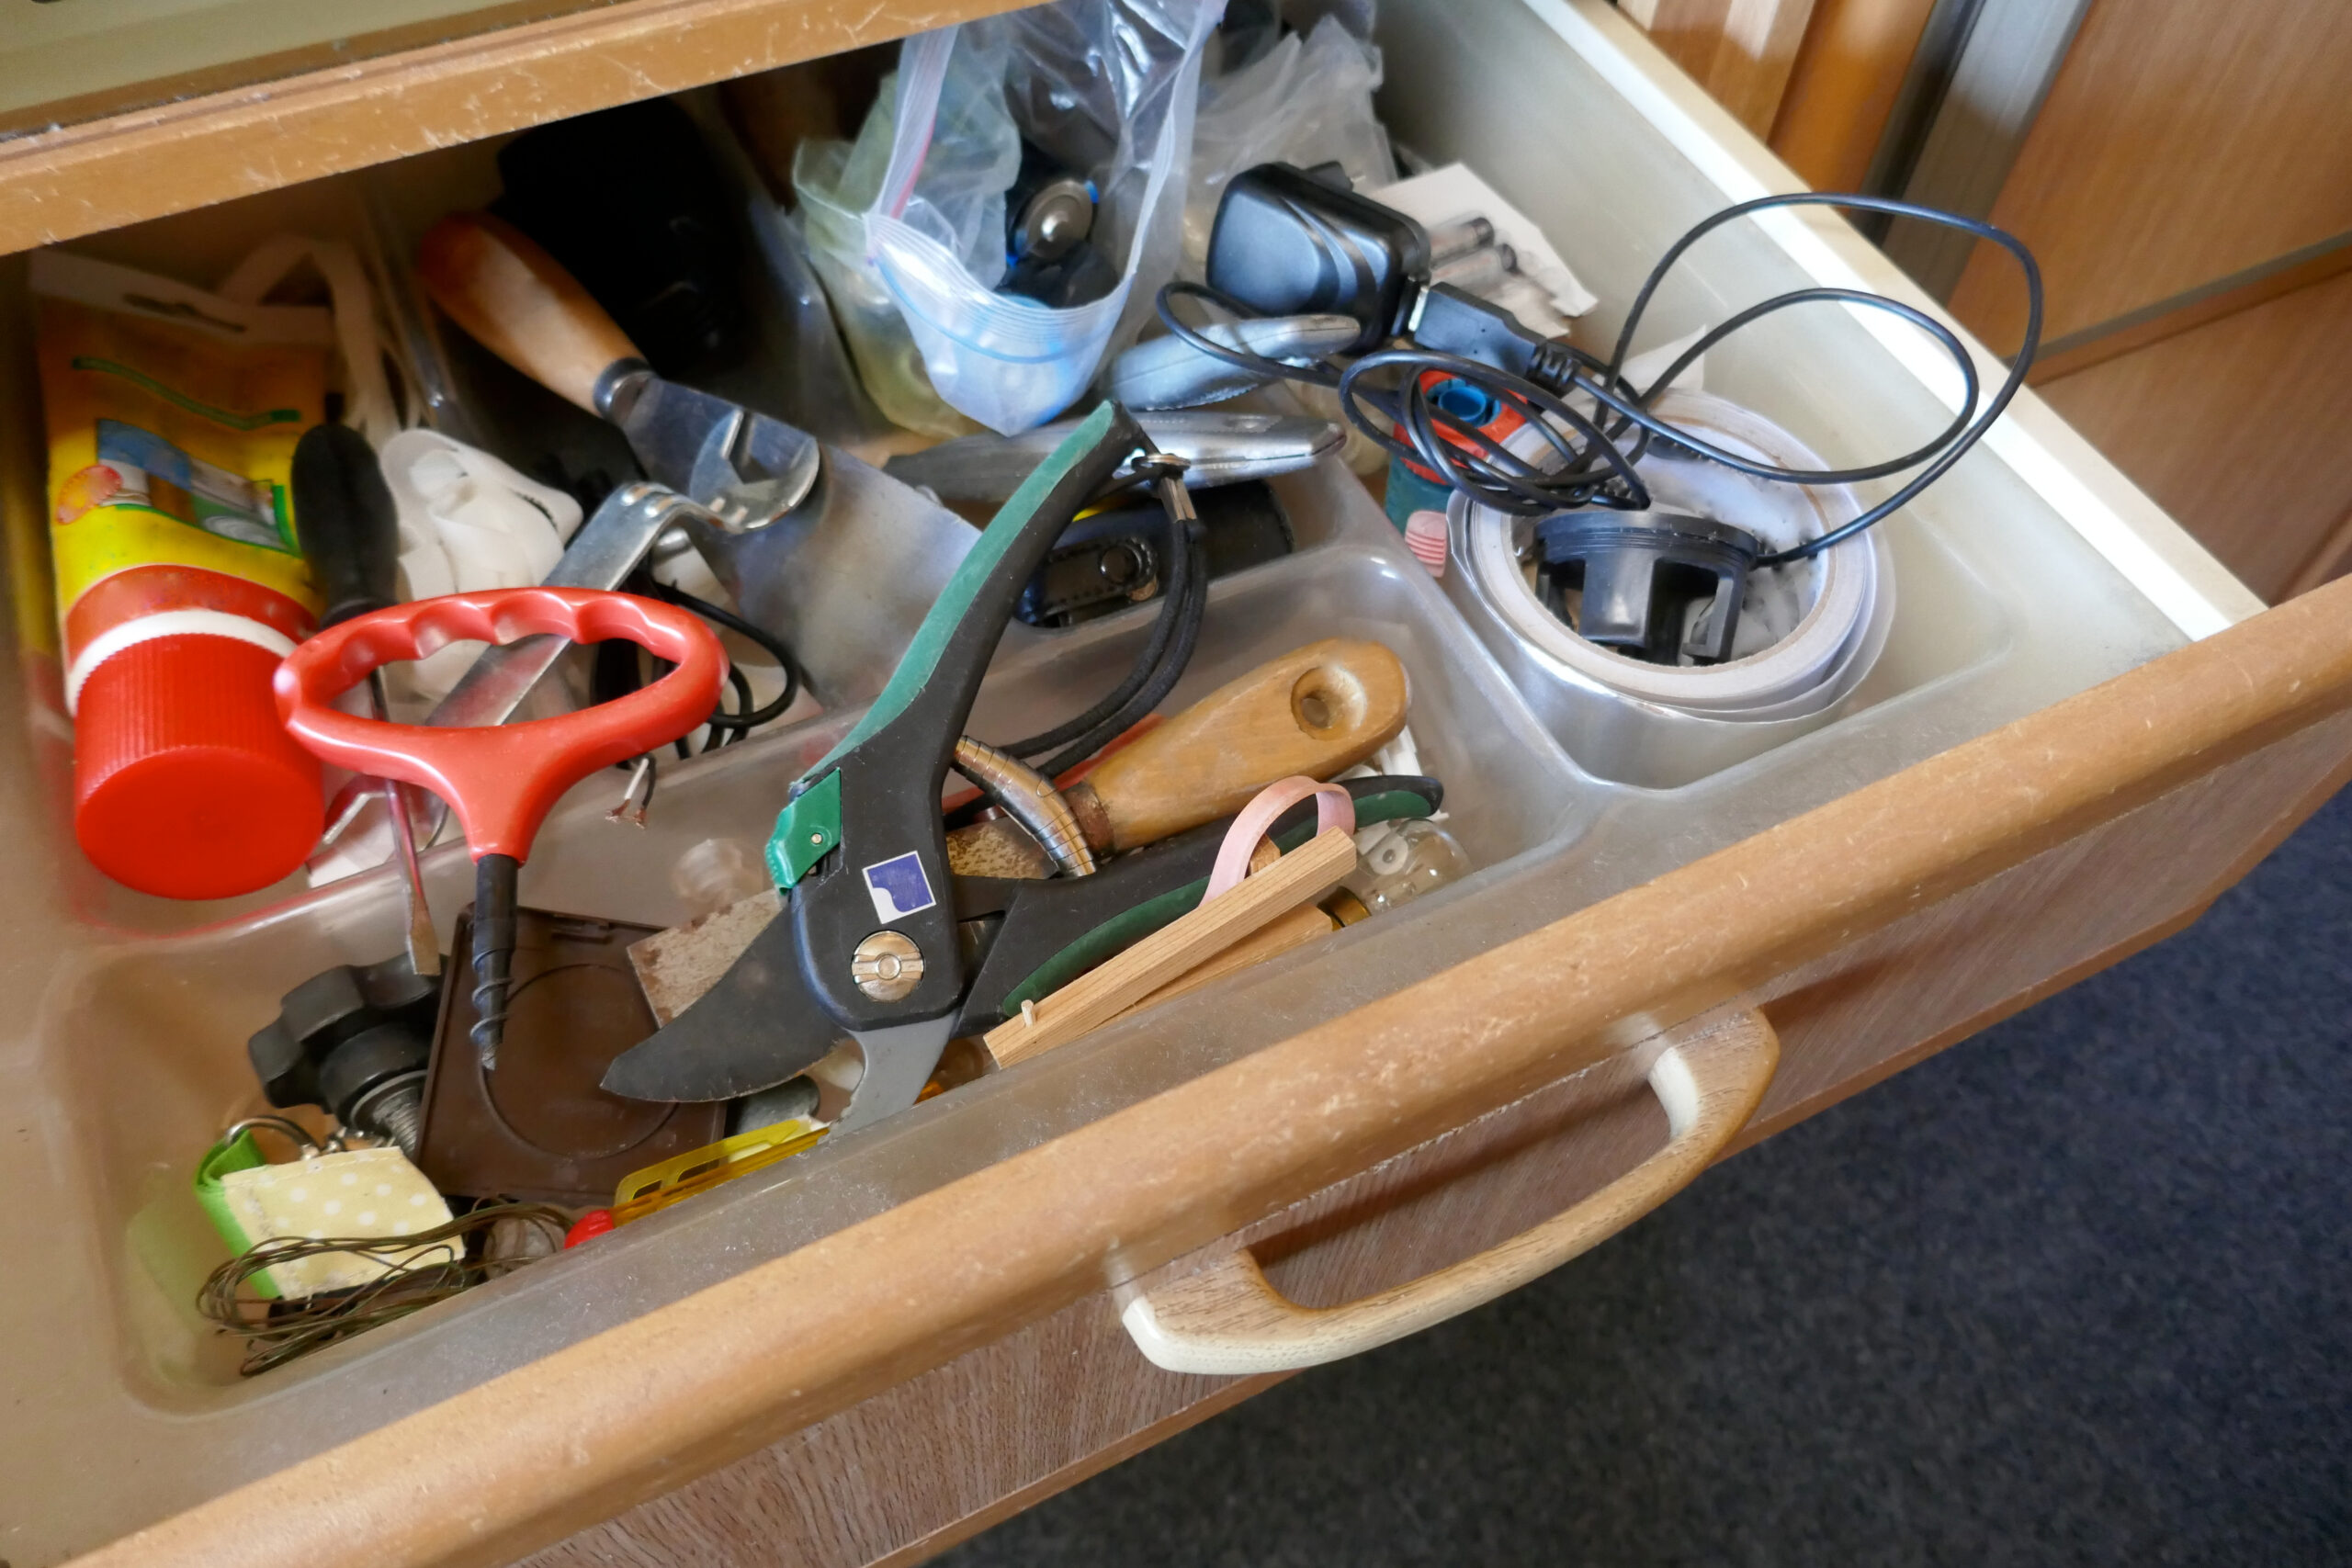 RV junk drawer